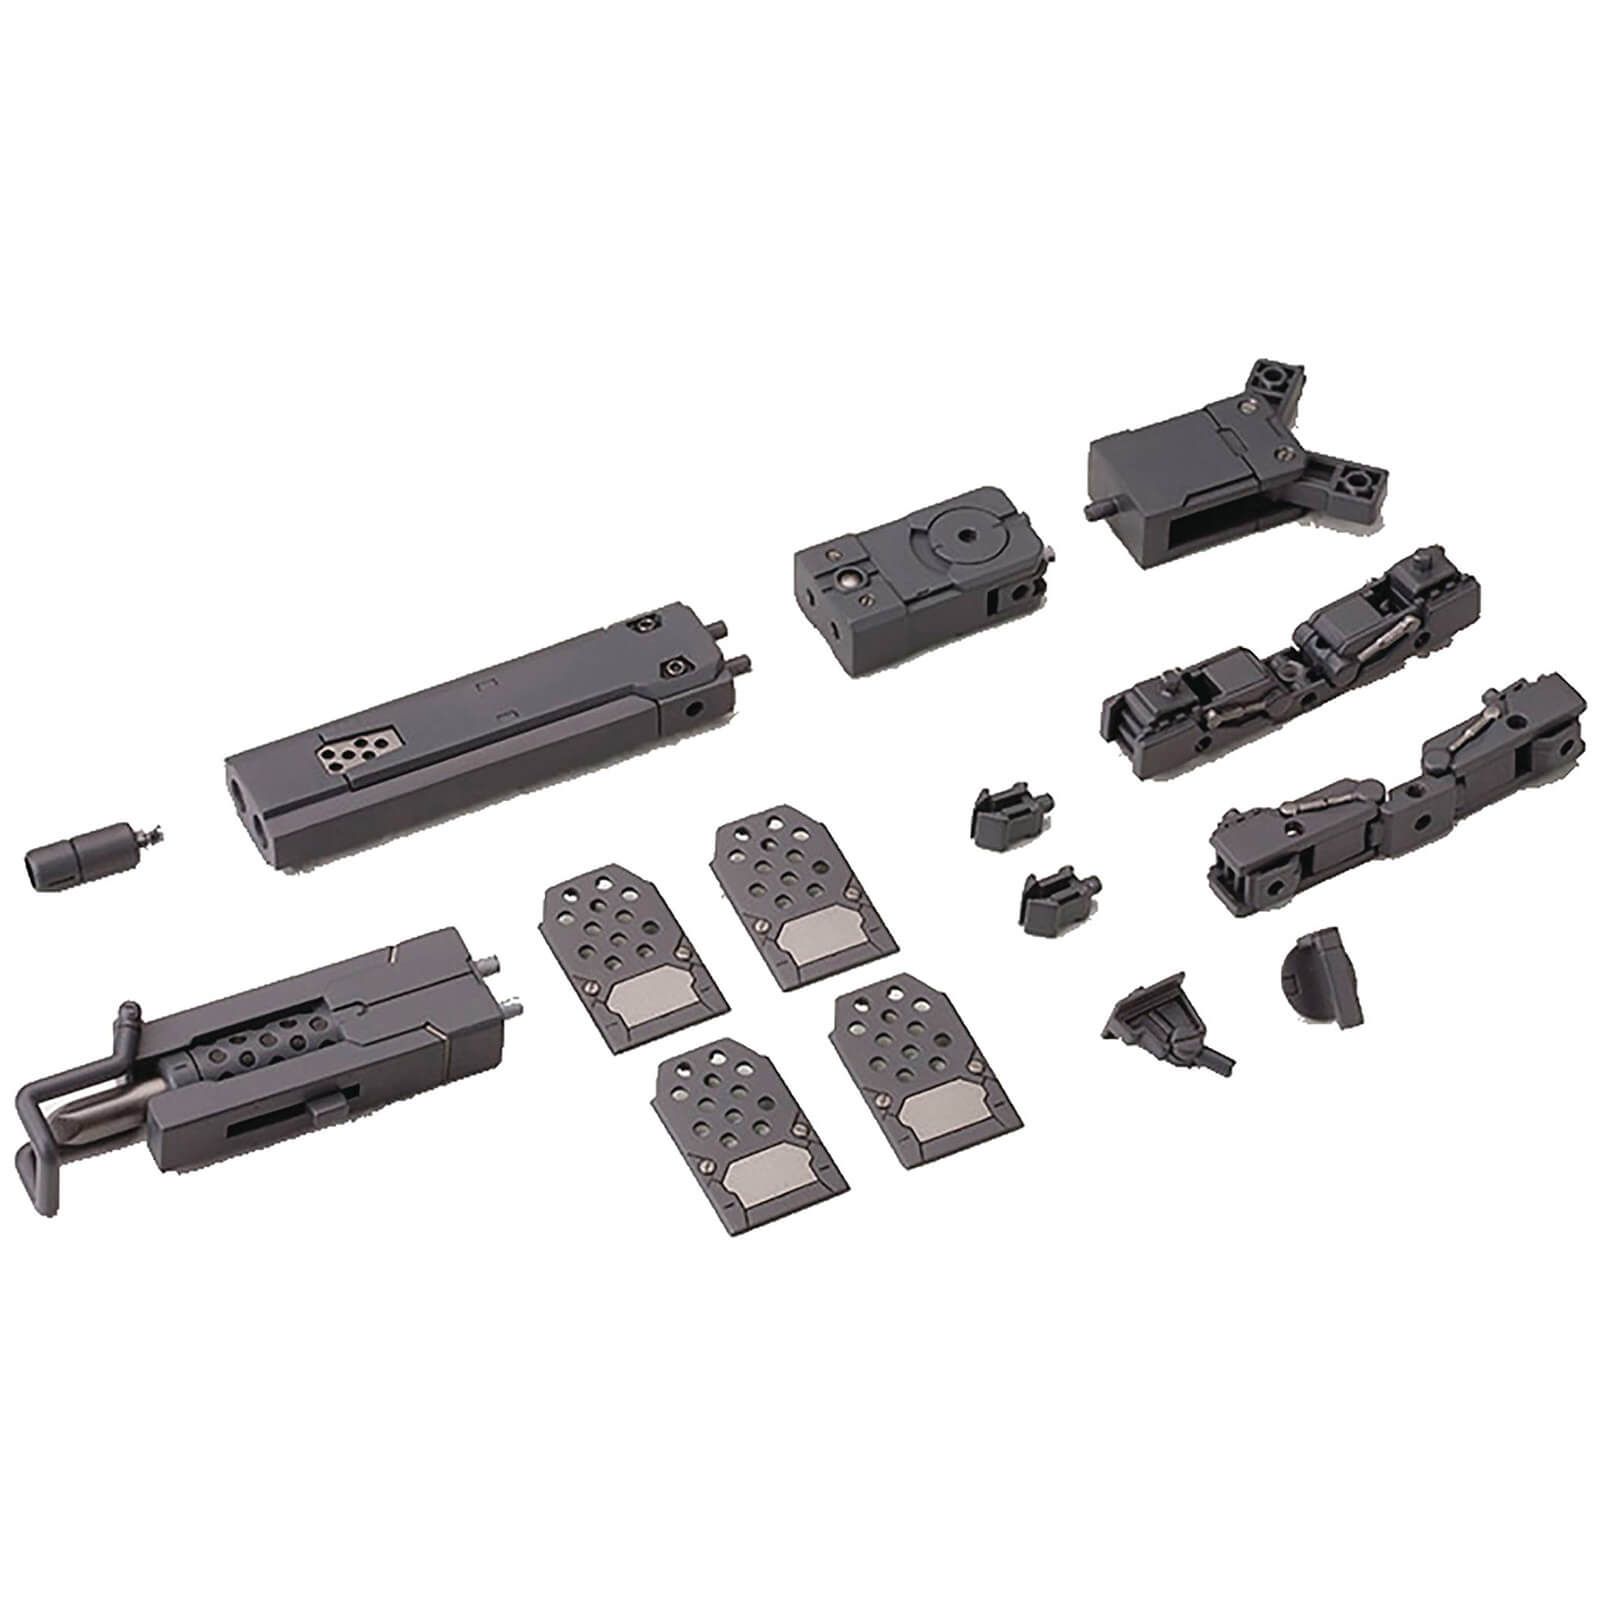 Kotobukiya Modeling Support Gear Plastic Model Kit Accessory - Grave Arms